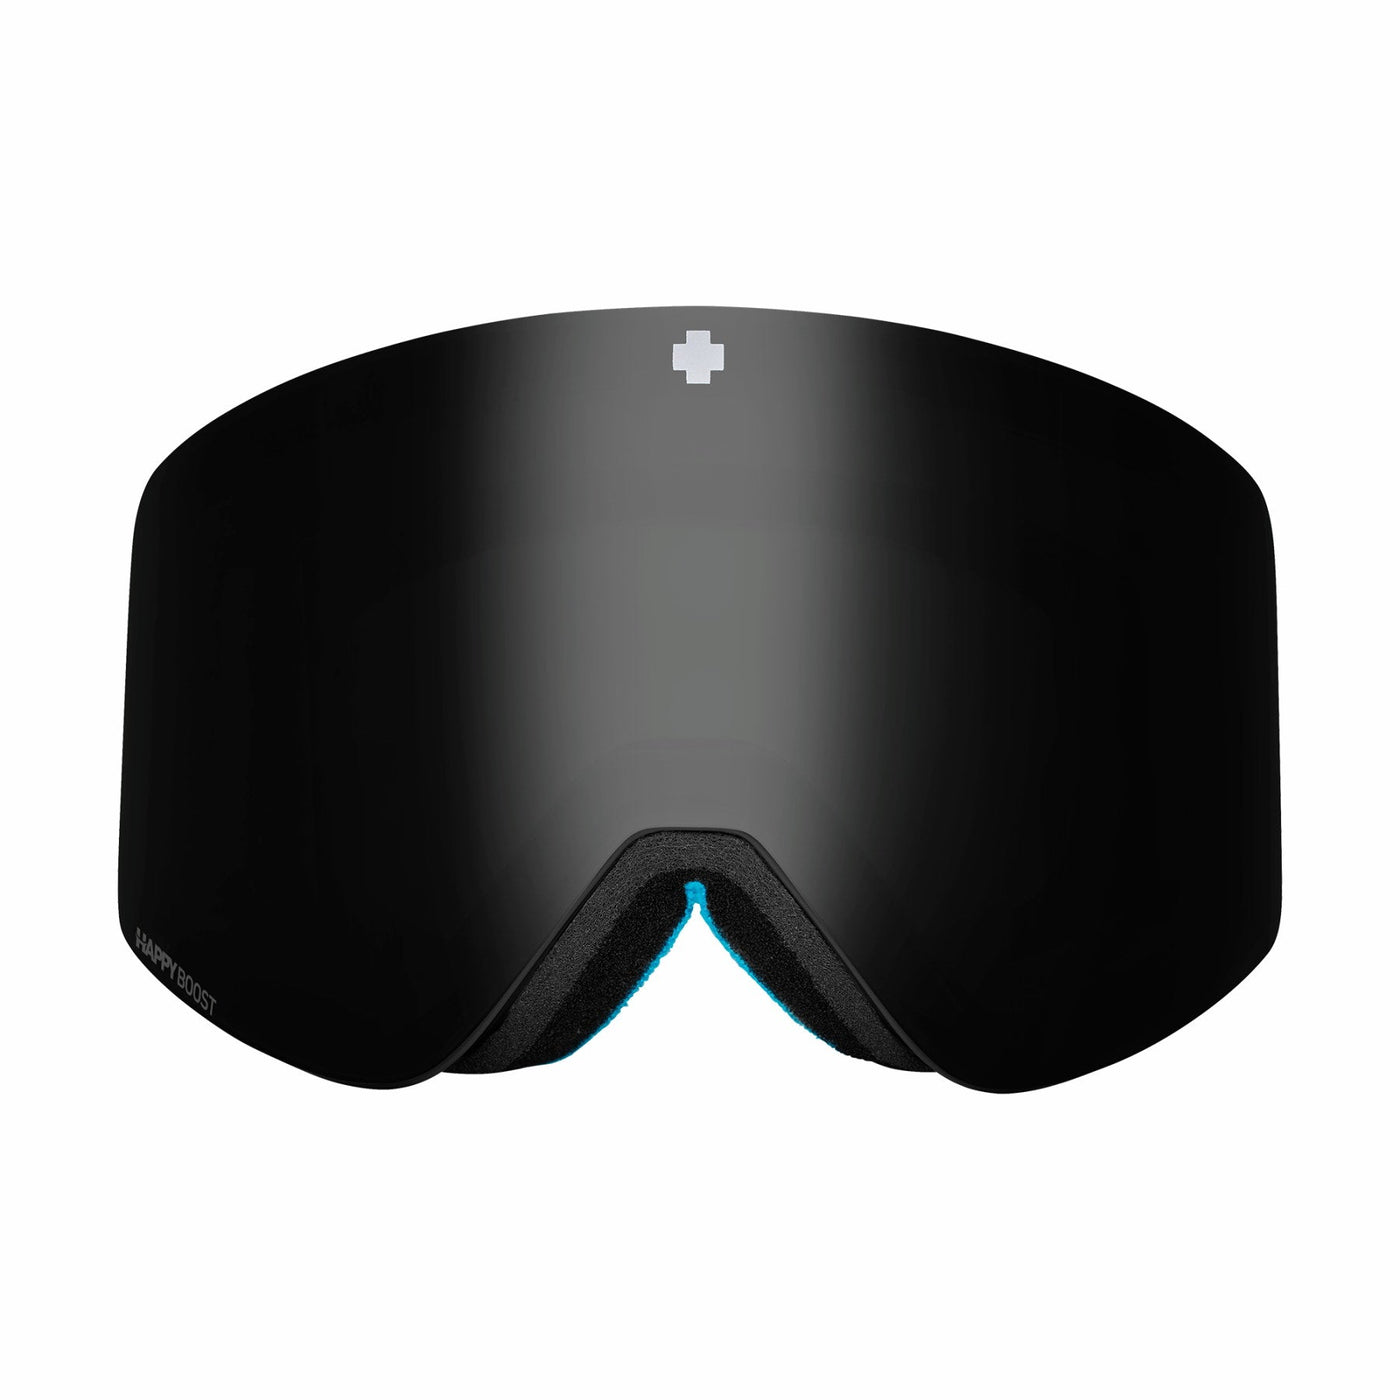 SPY Marauder Chris Rasman Snow Goggles - Happy Boost Lens 8Lines Shop - Fast Shipping